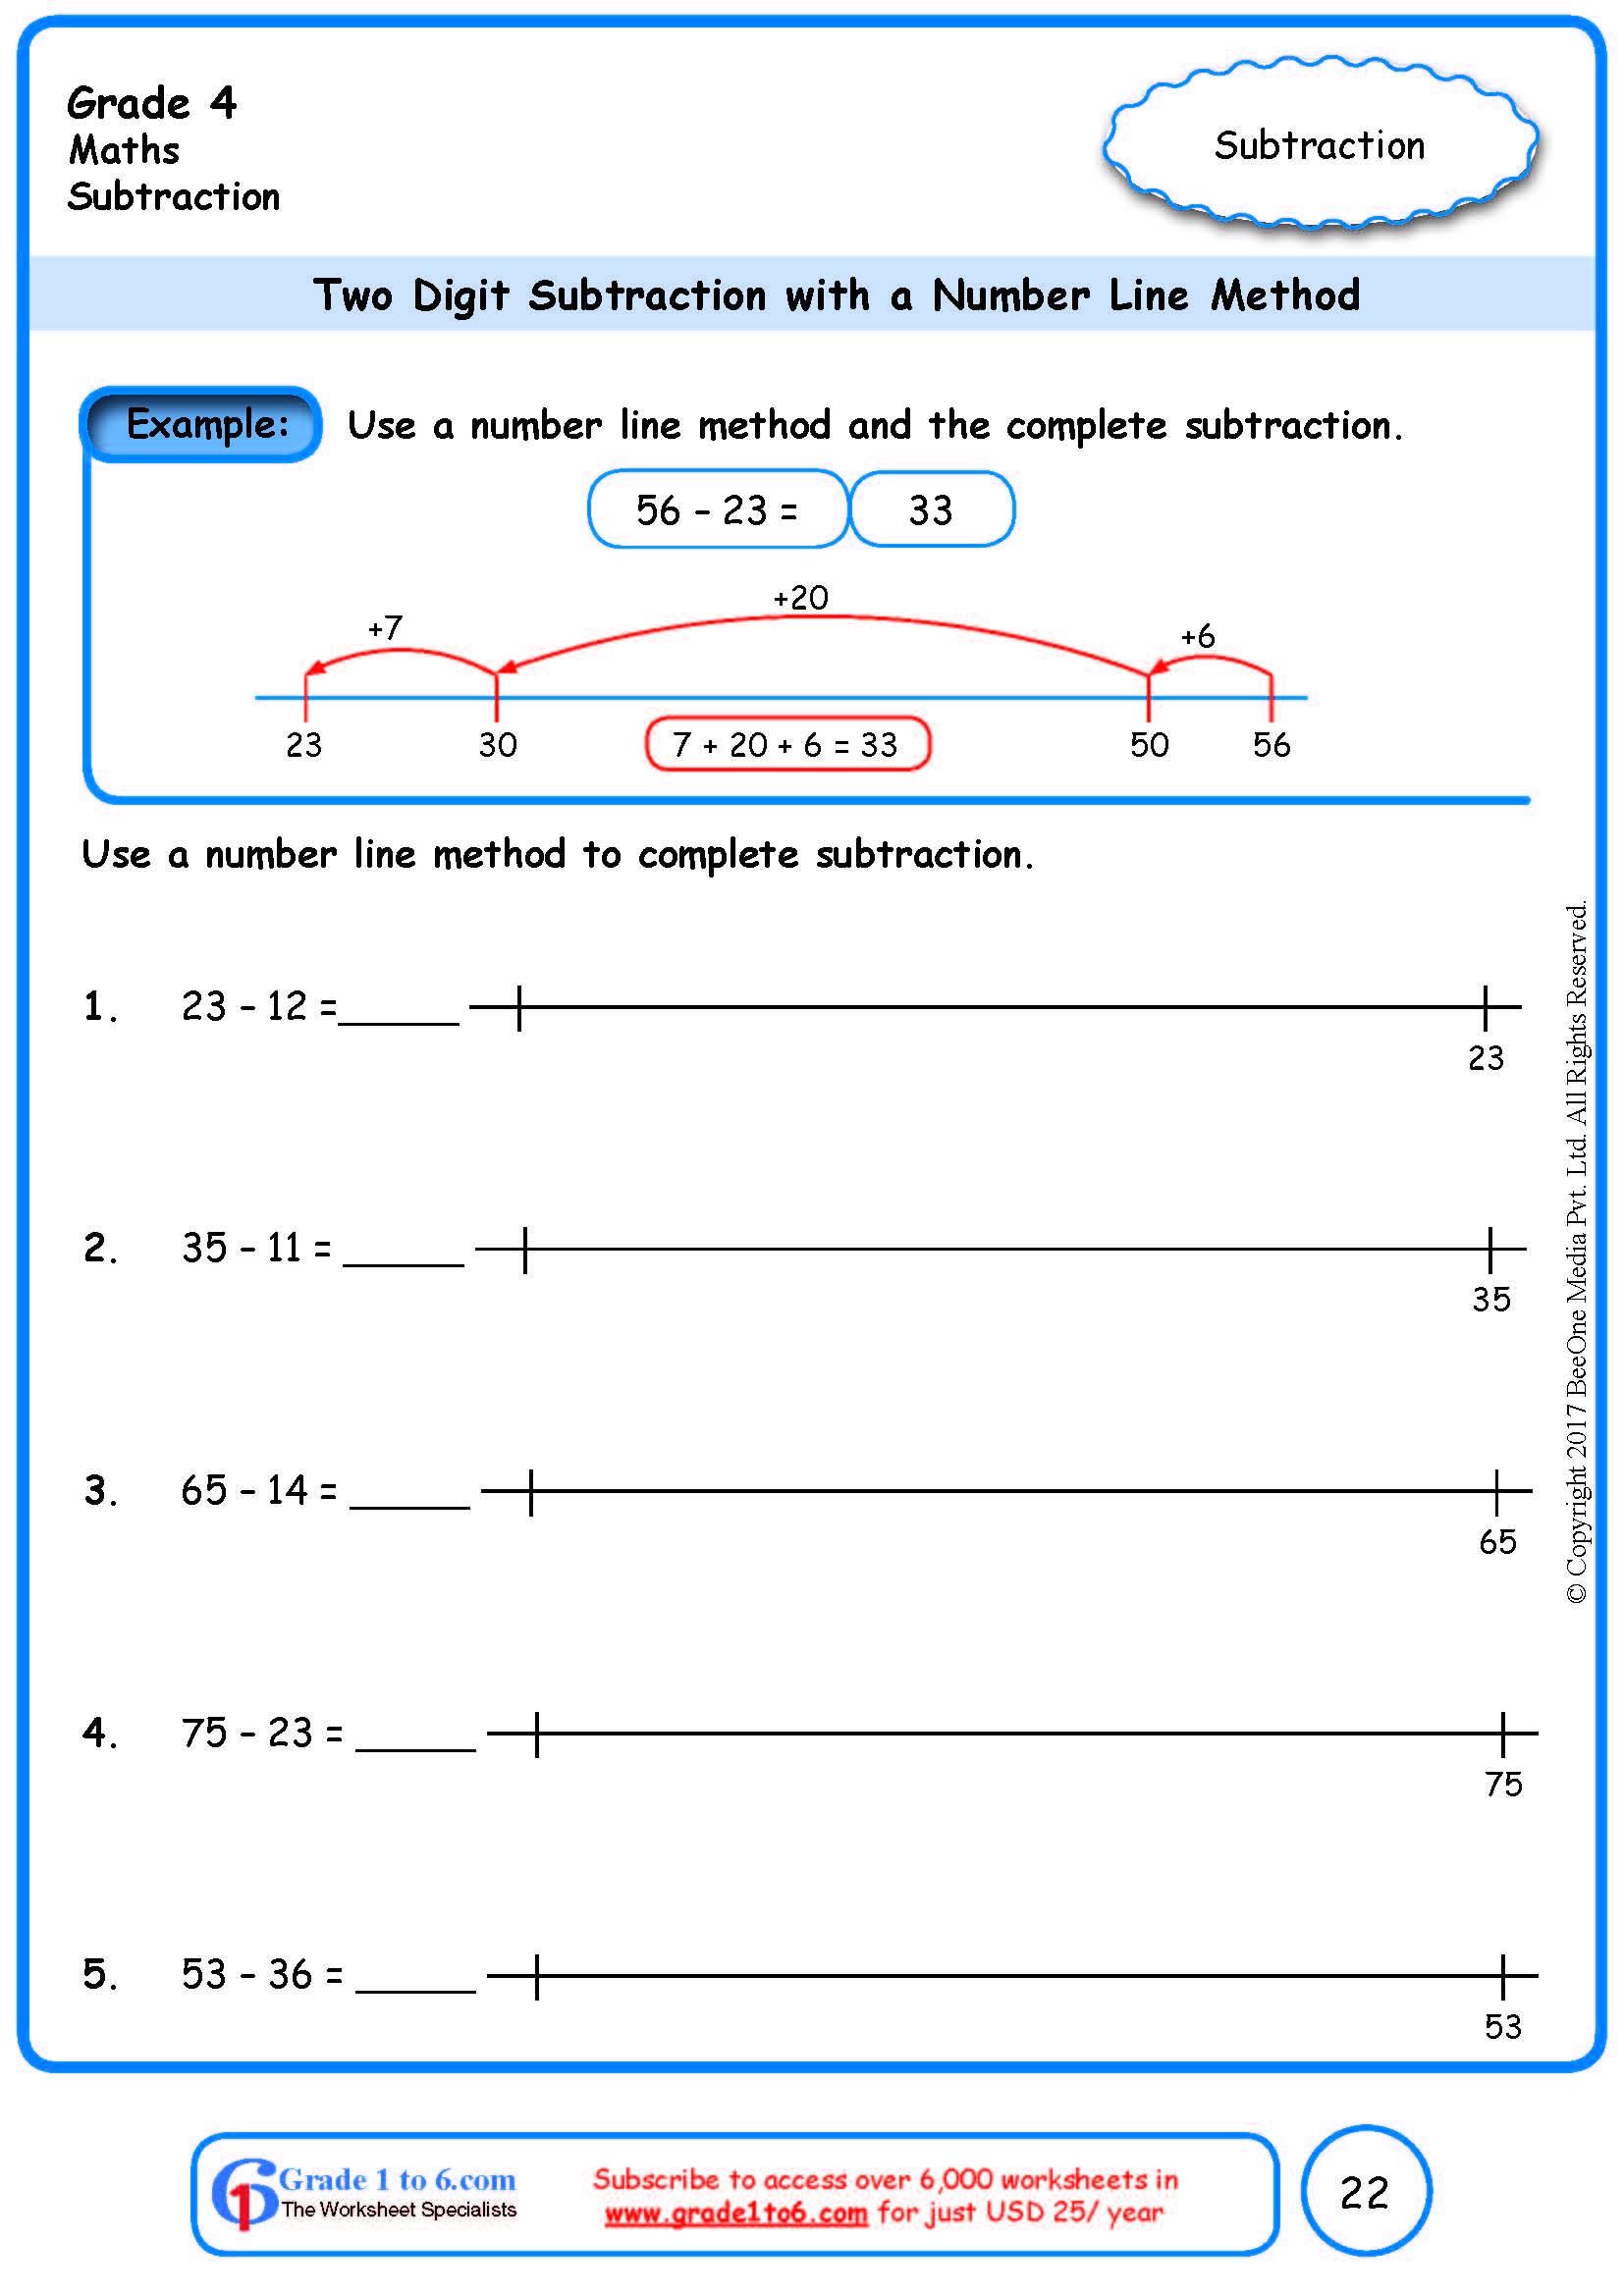 number-line-subtraction-worksheets-www-grade1to6